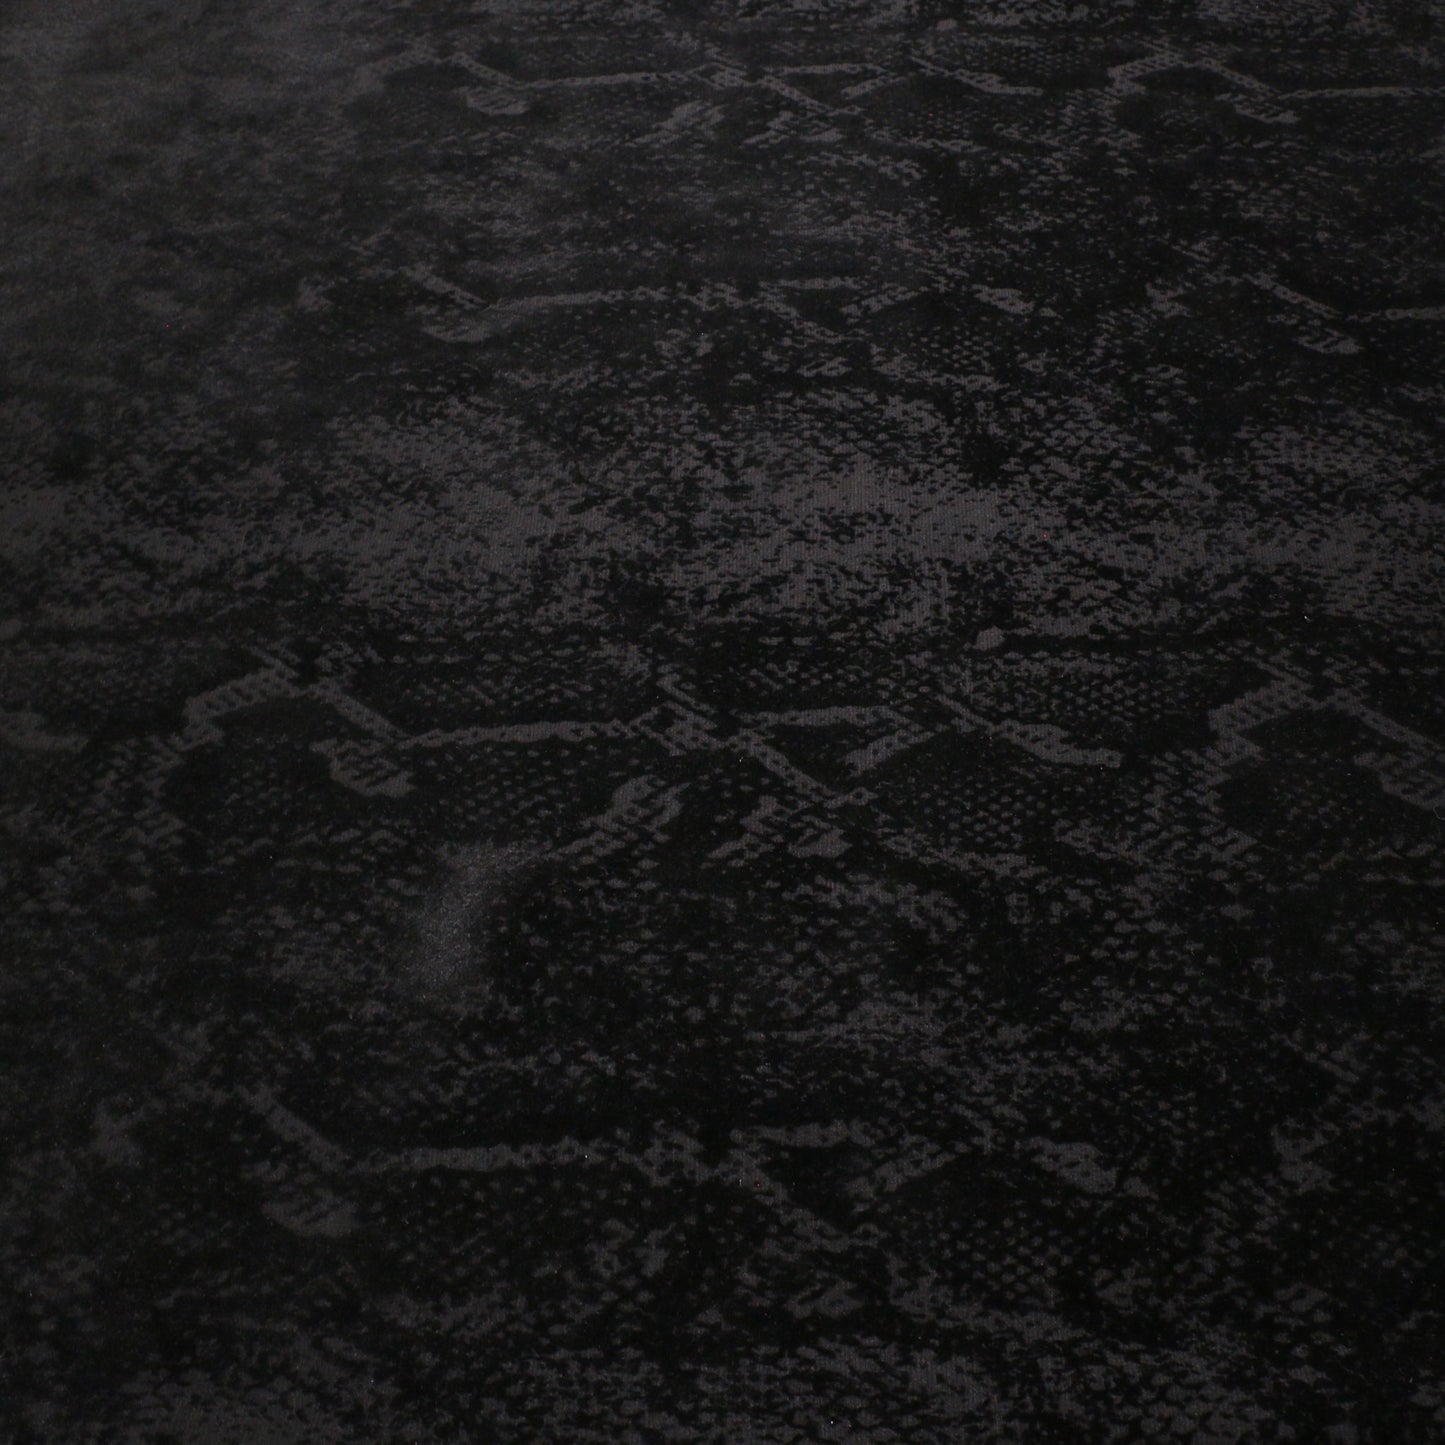 black ponte roma fabric with snake skin pattern